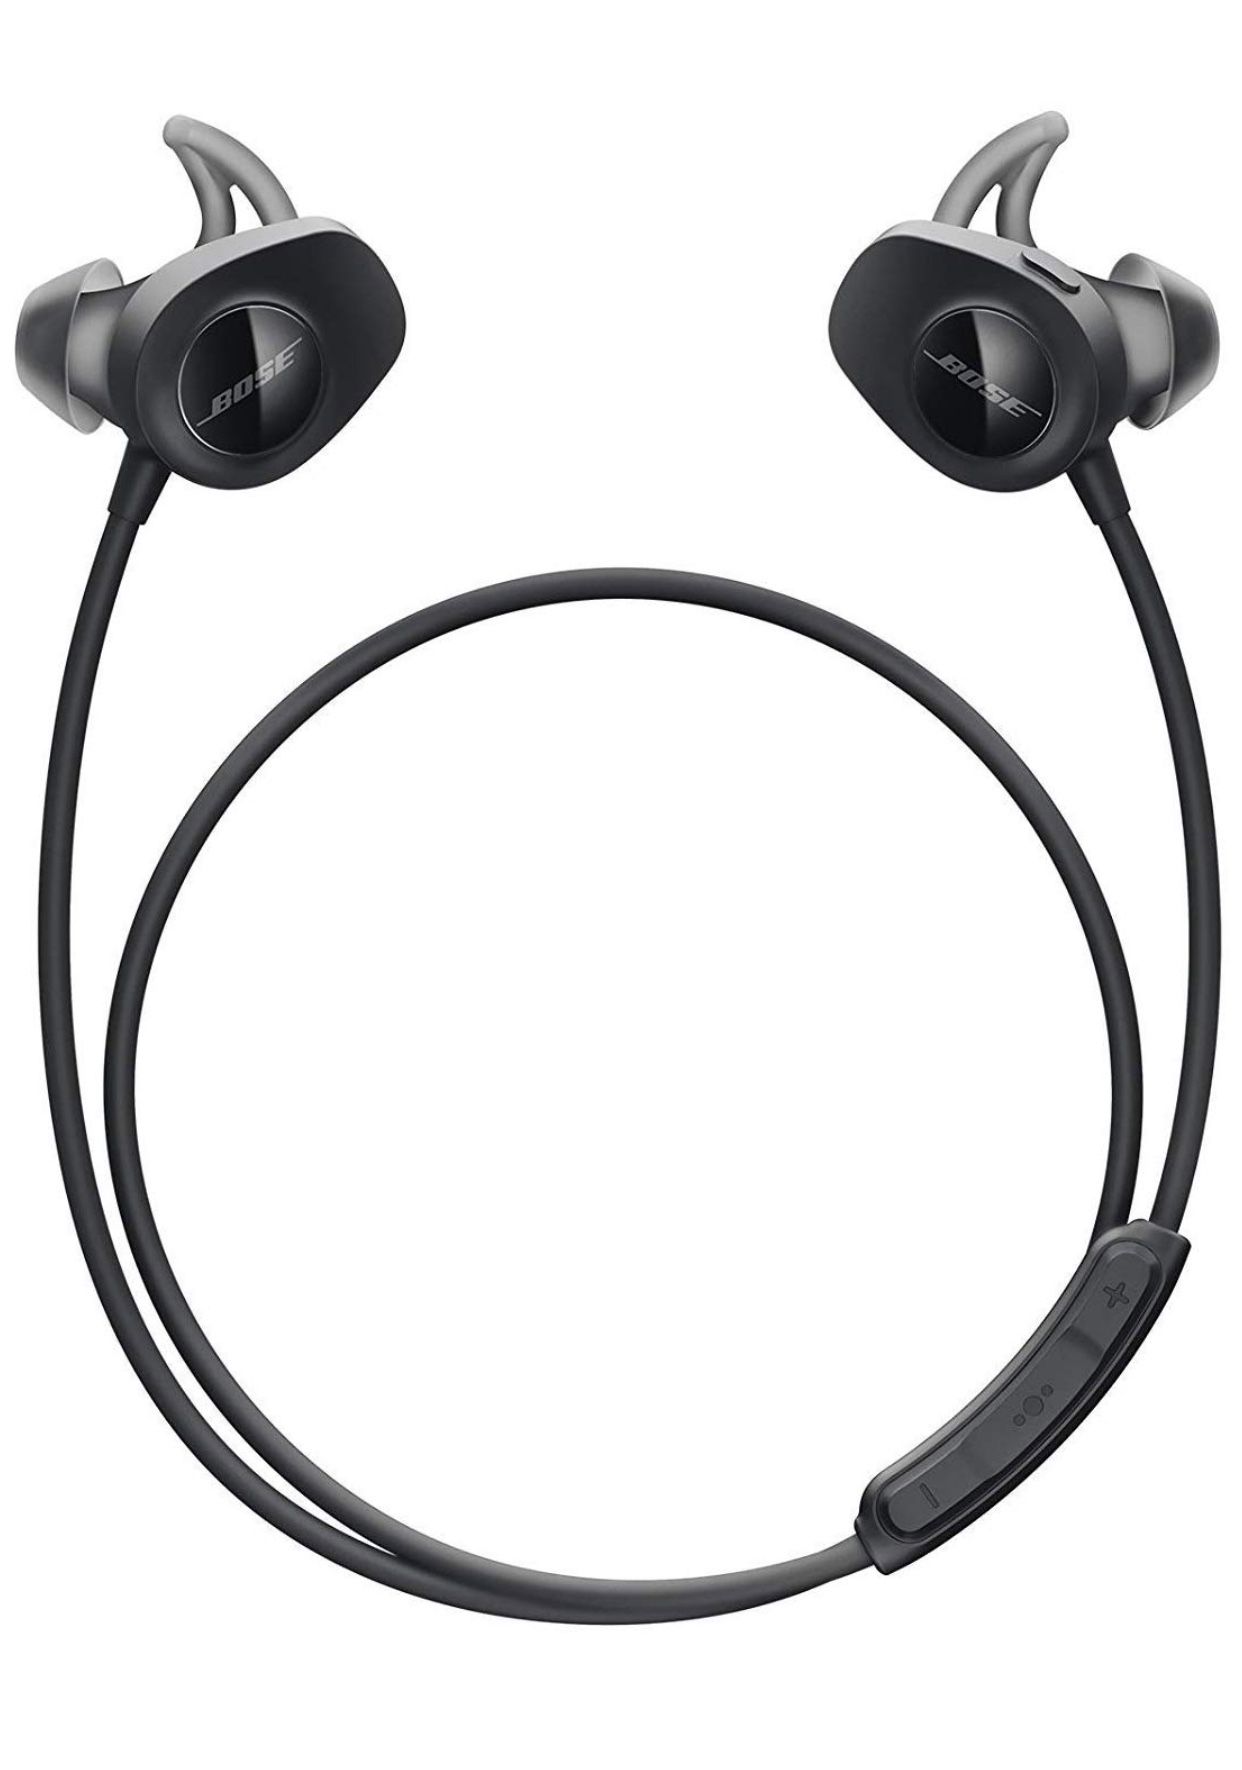 Bose SoundSport bluetooth headset